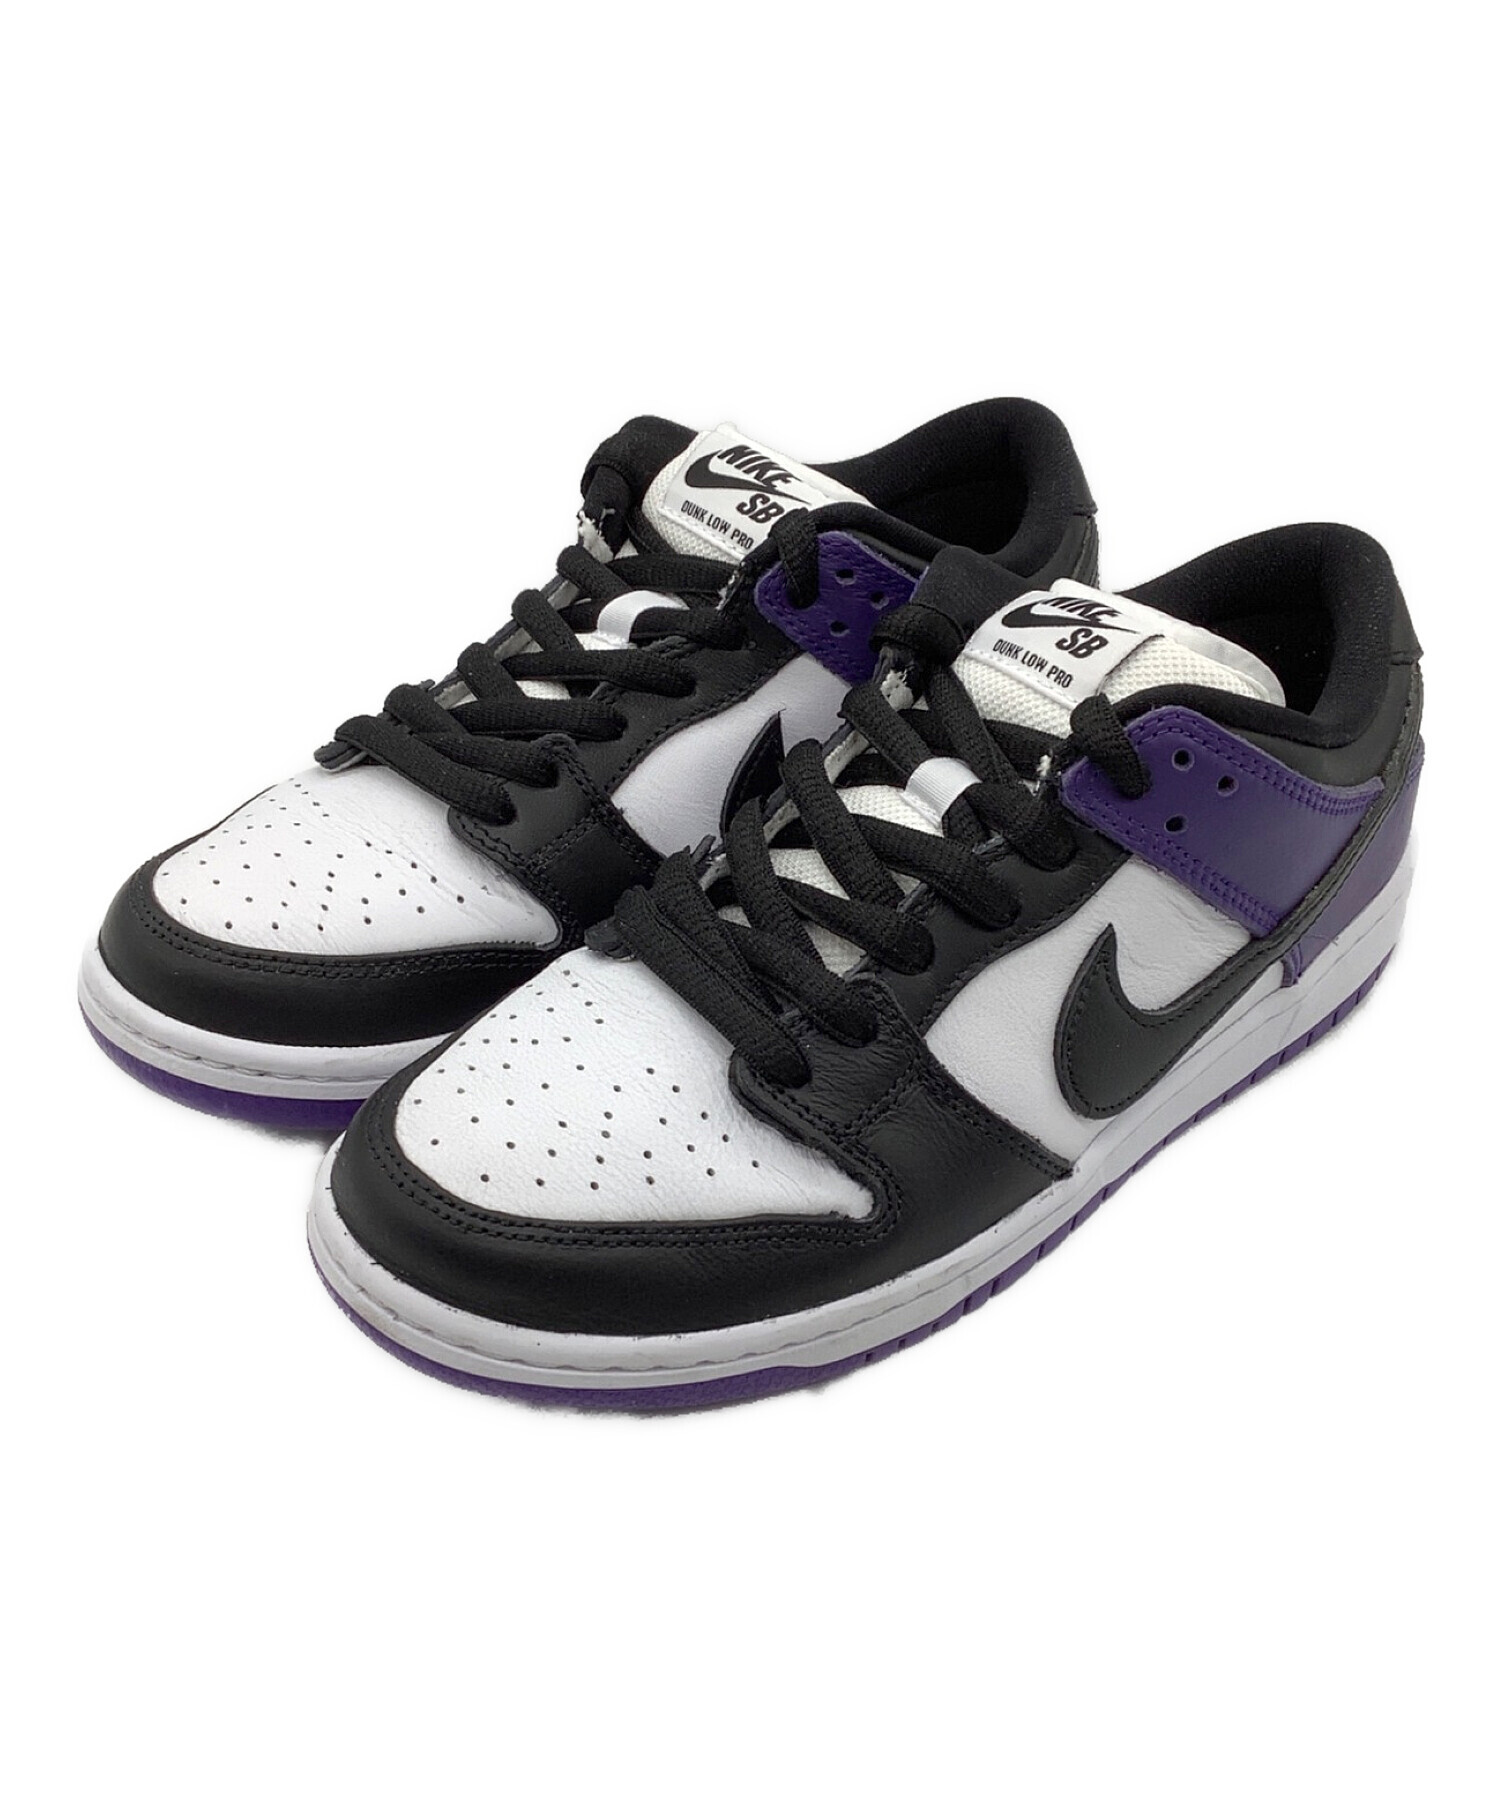 Nike SB Dunk Low Pro Court Purple 25cm即購入大歓迎